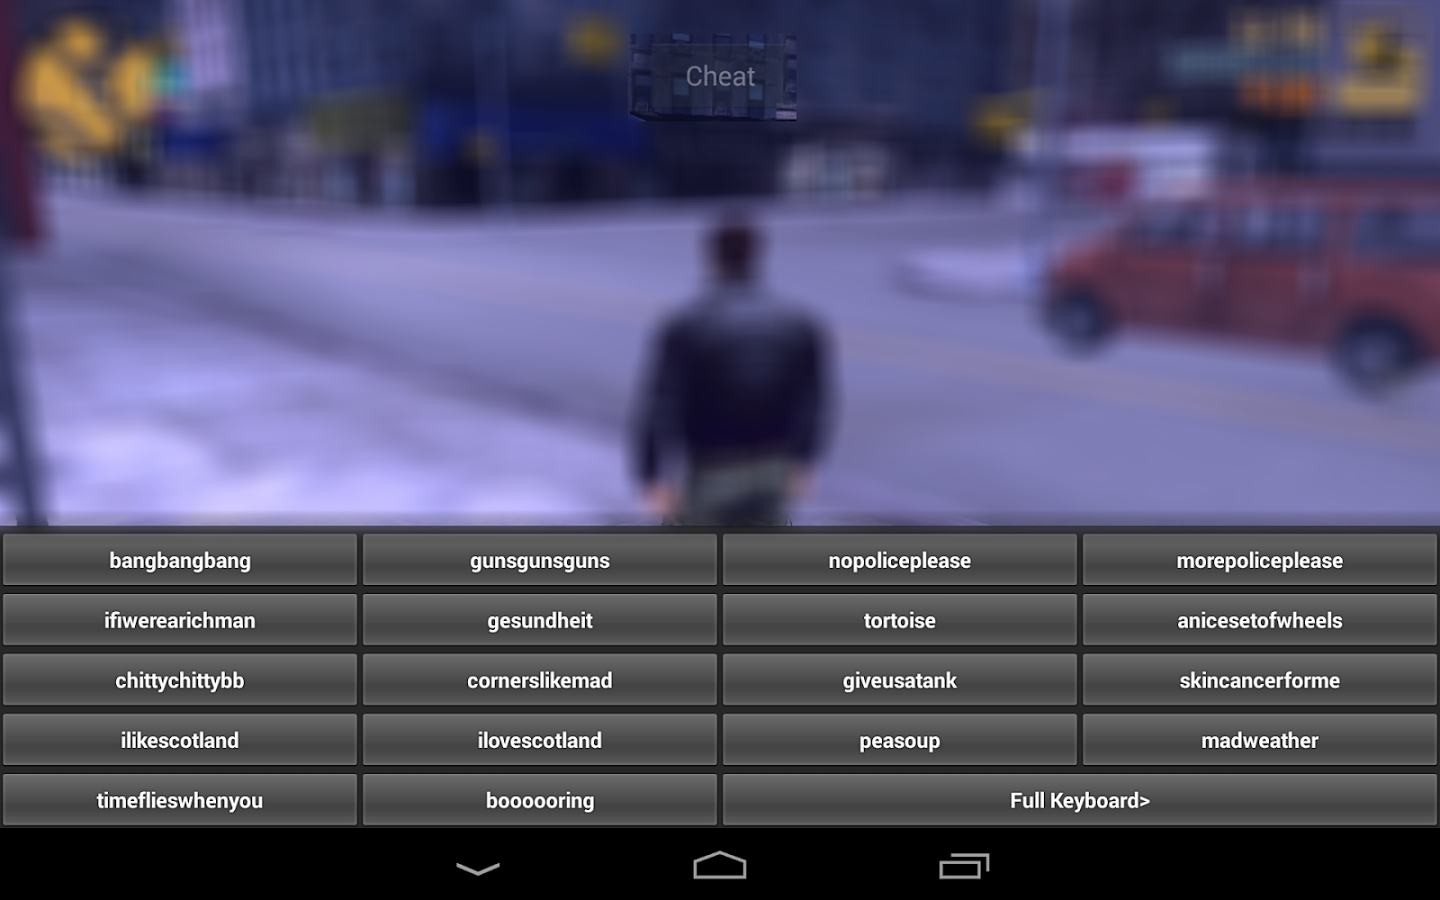 Скачать GTA III Cheater 1.8 для Android - 1440 x 900 png 575kB